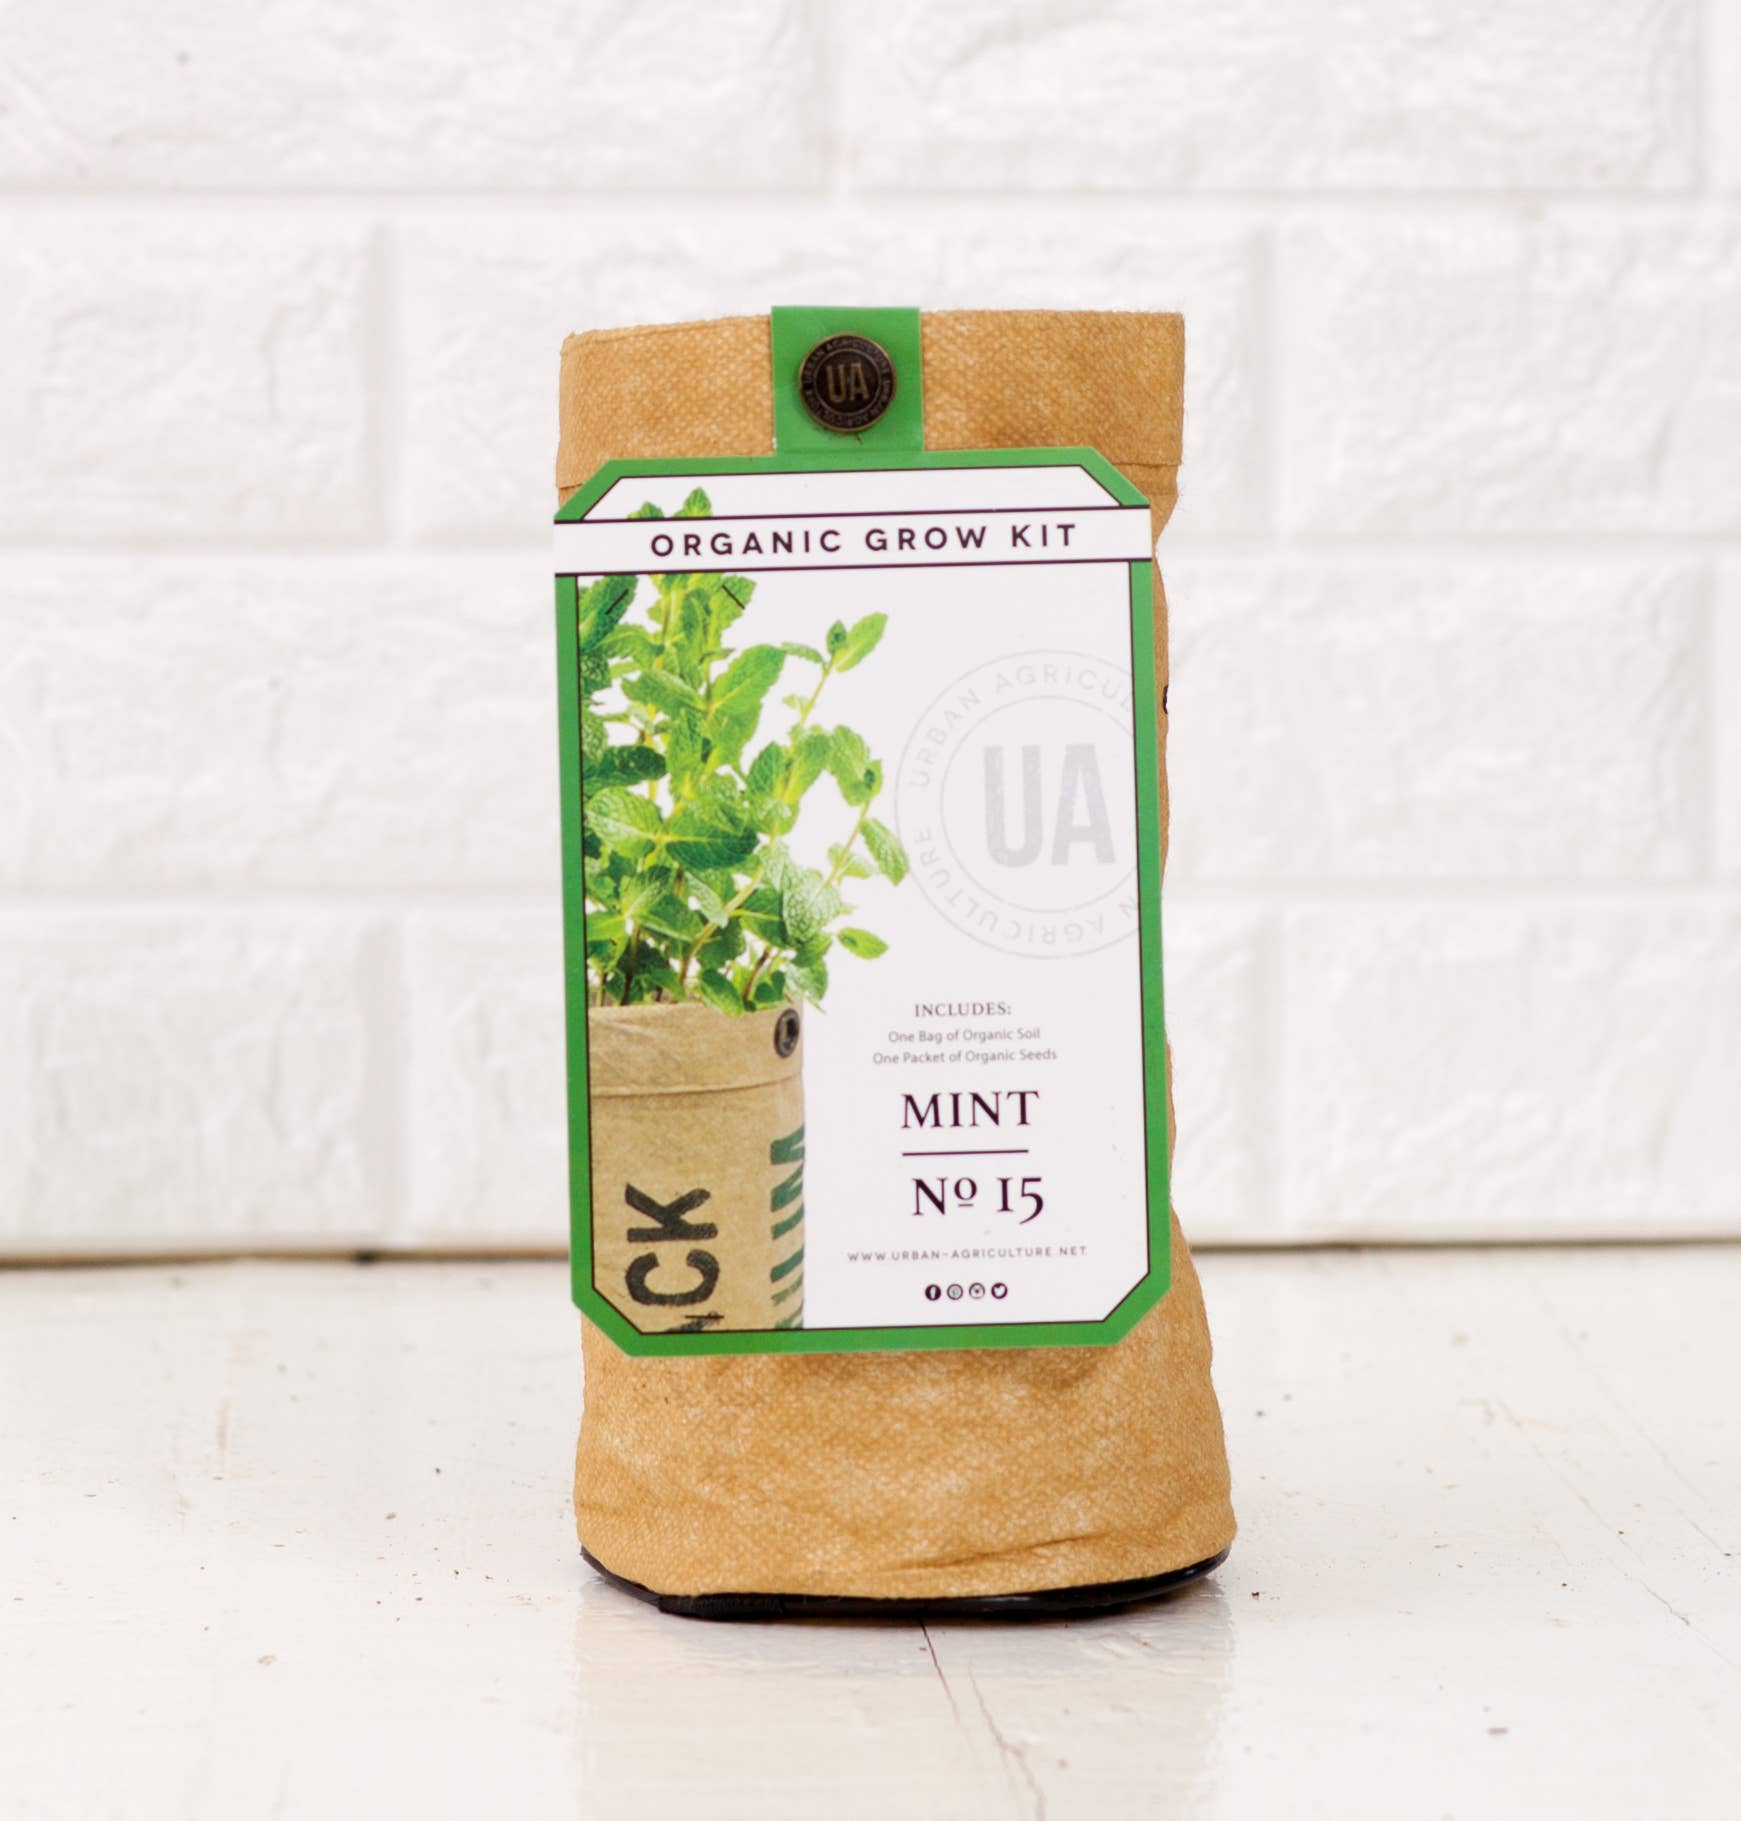 https://popshopamerica.com/wp-content/uploads/2021/01/organic-mint-herb-growing-kit.jpg